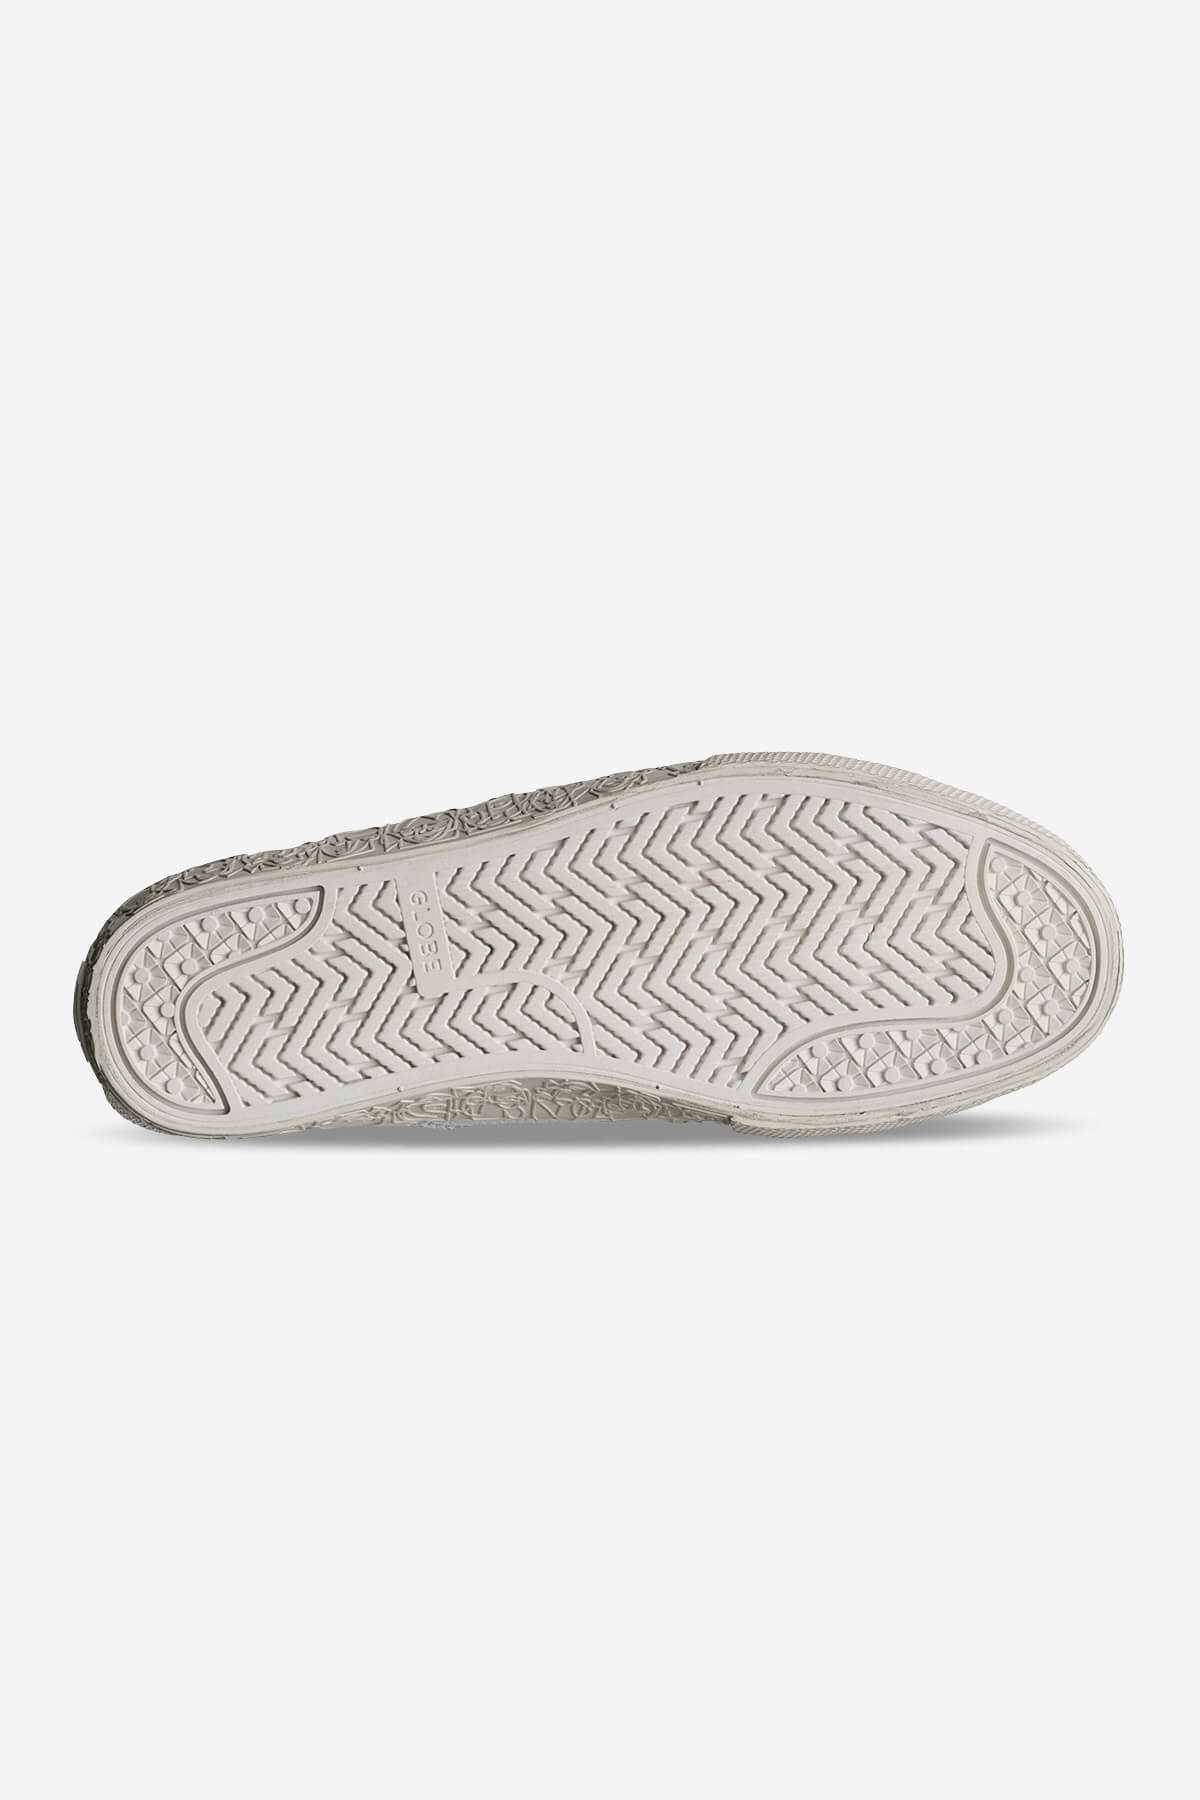 Globe - Surplus - White/Montano - skateboard Schuhe